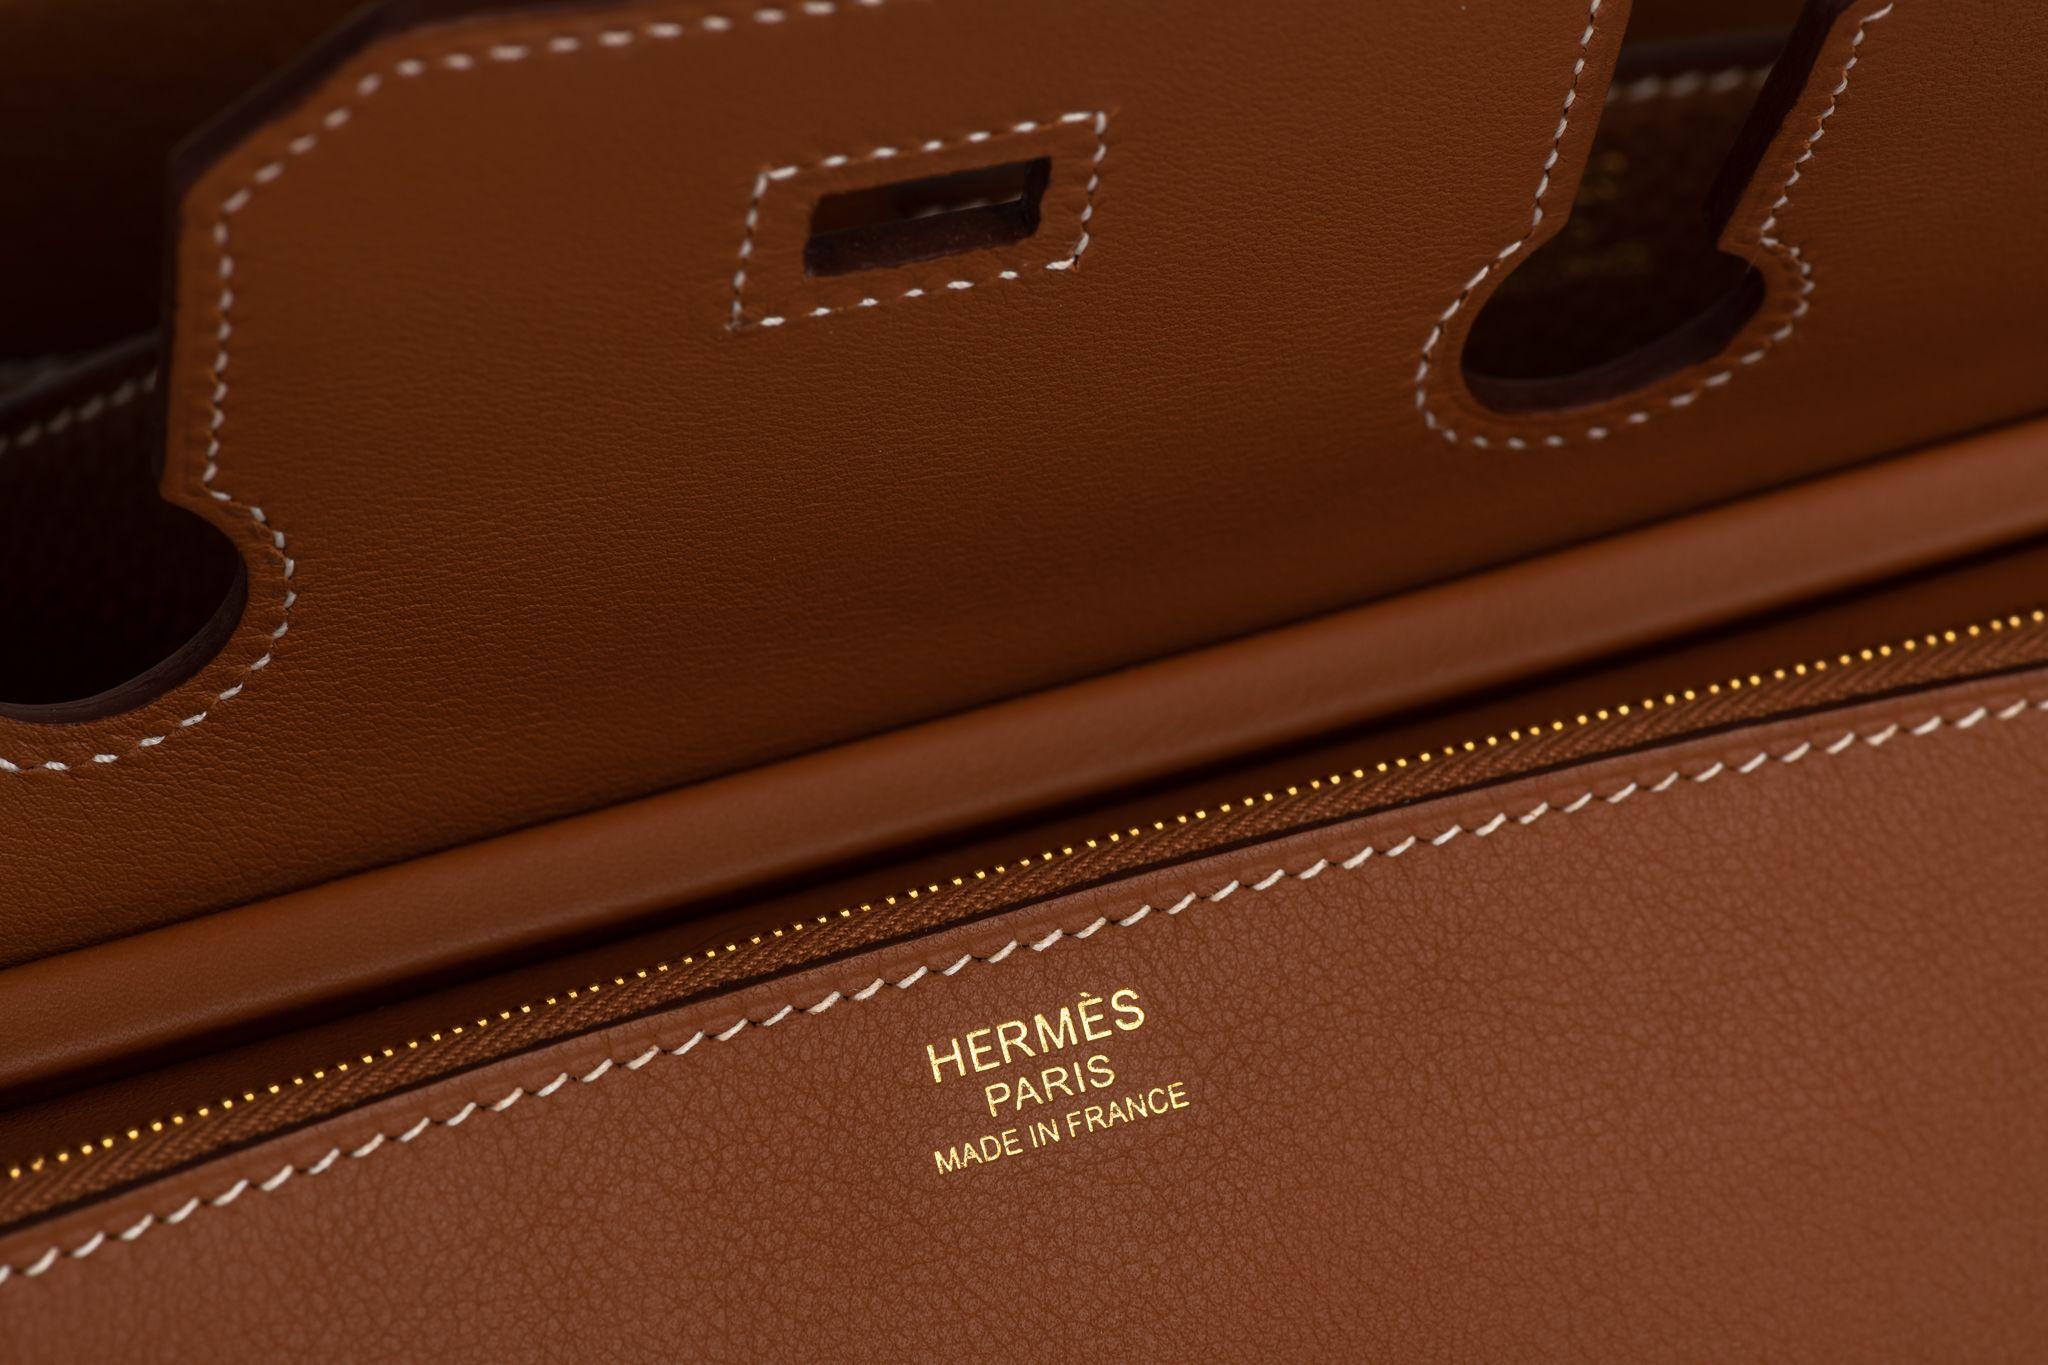 Hermès BNIB Birkin 30 3 in 1 Bag Gold For Sale 7